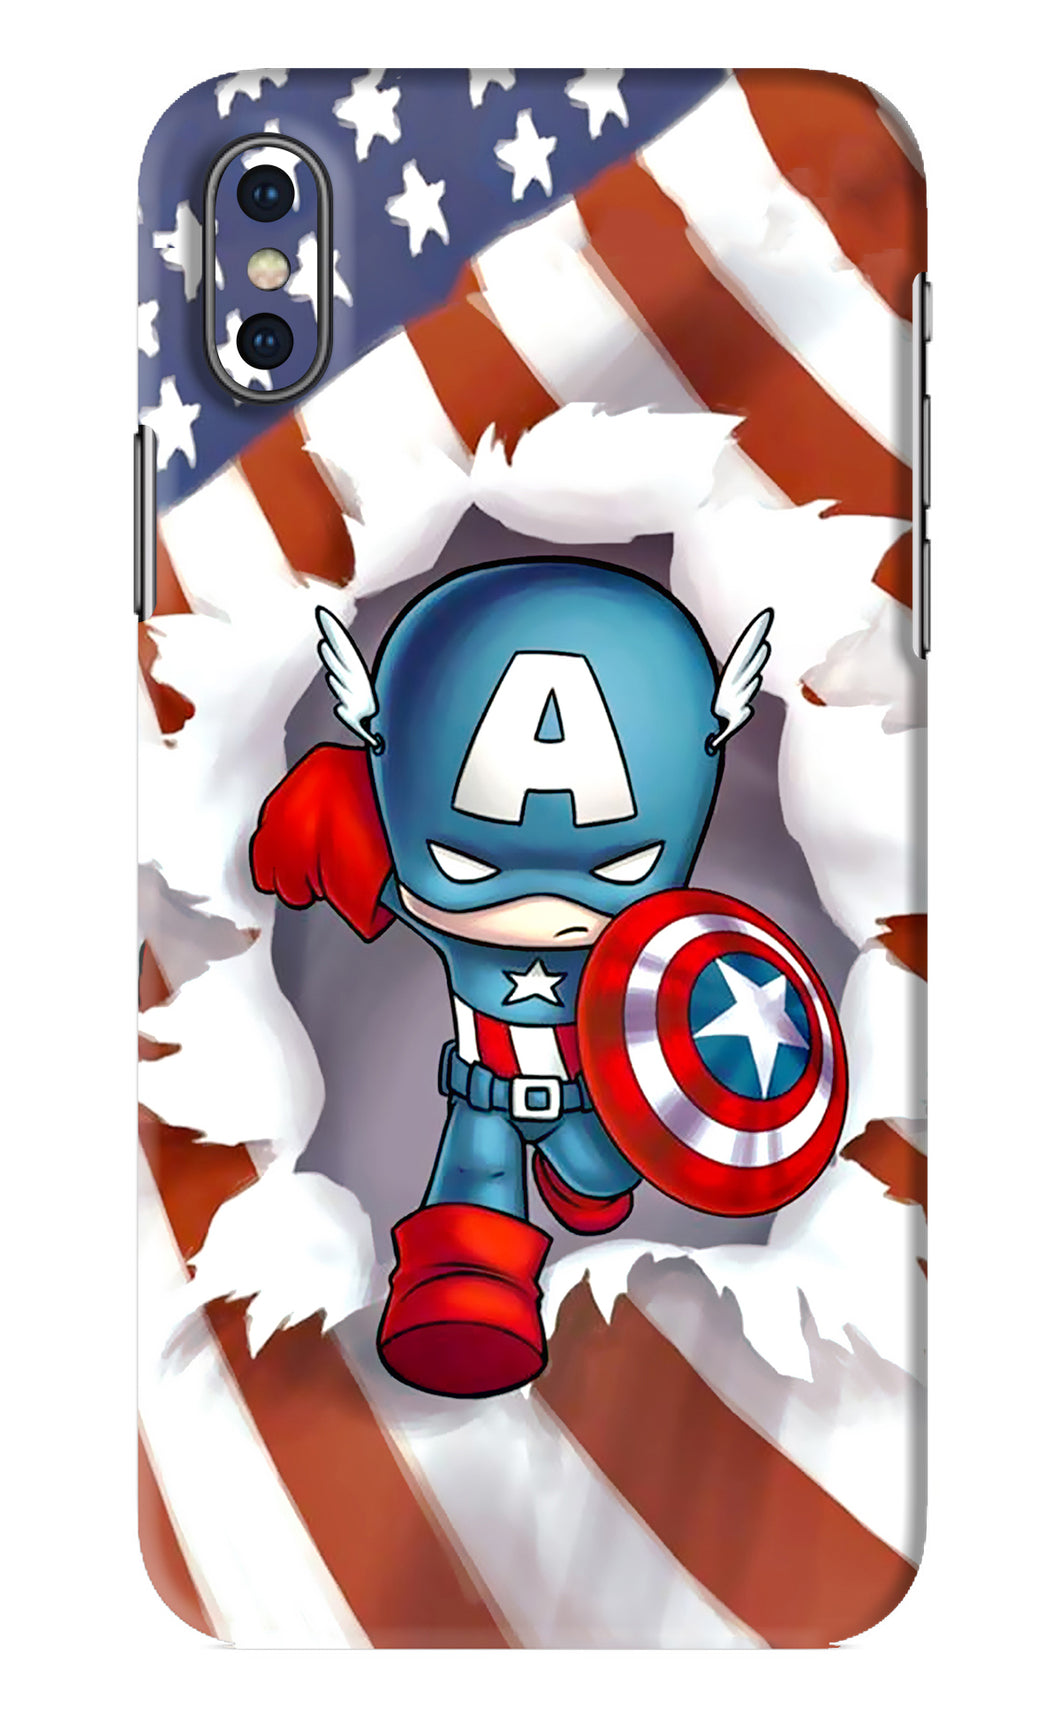 Captain America iPhone X Back Skin Wrap